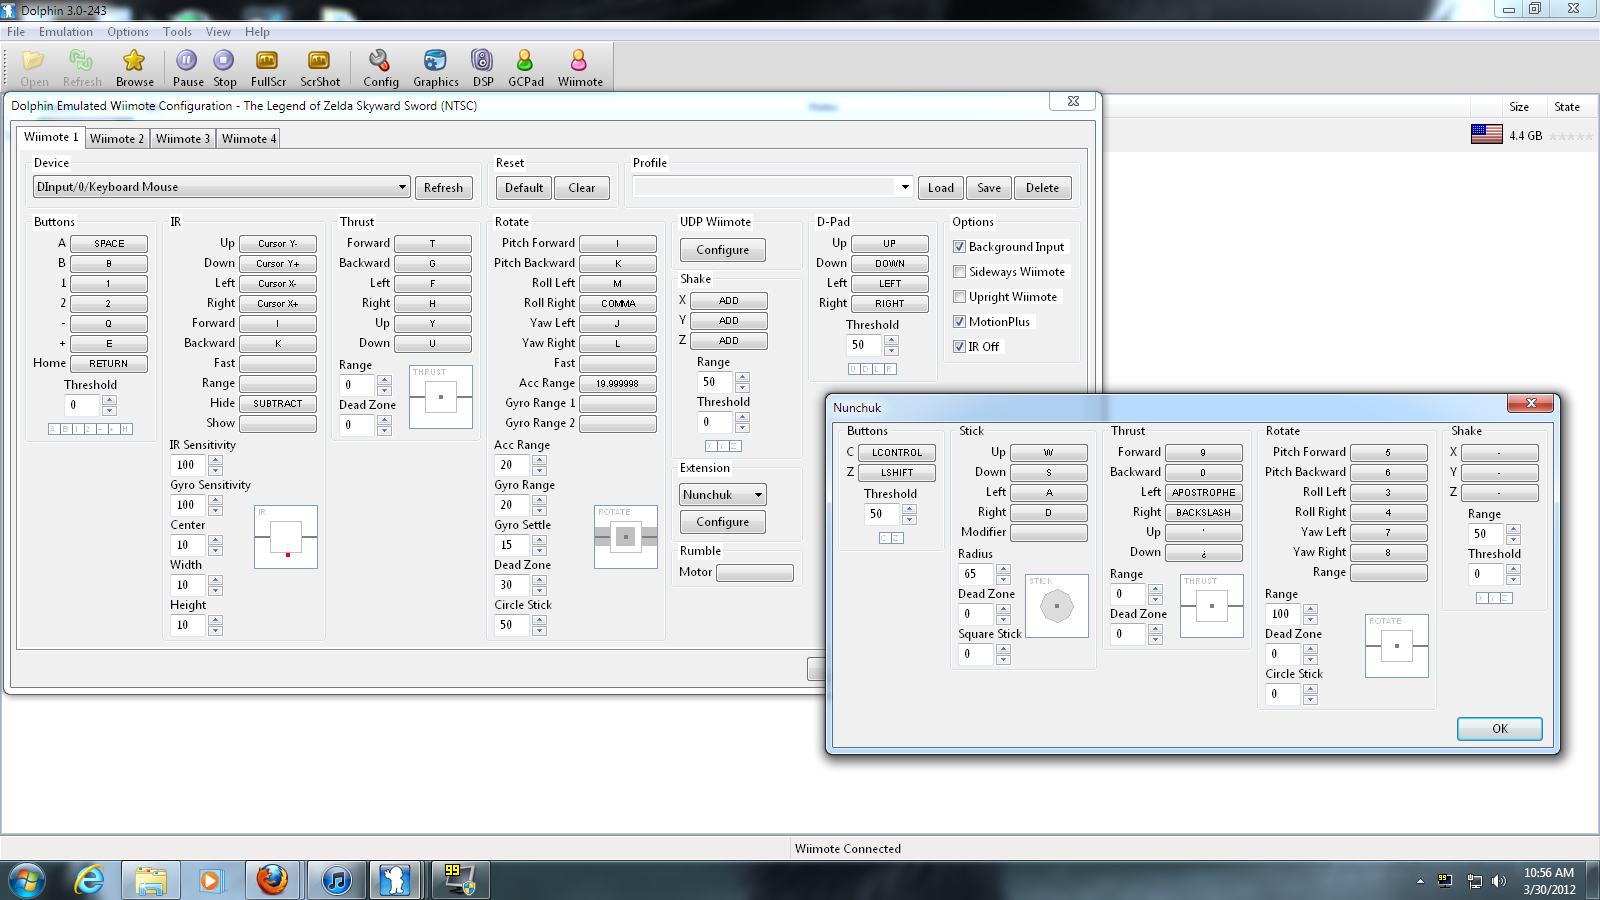 dolphin emulator 5.0 keyboard mouse controls